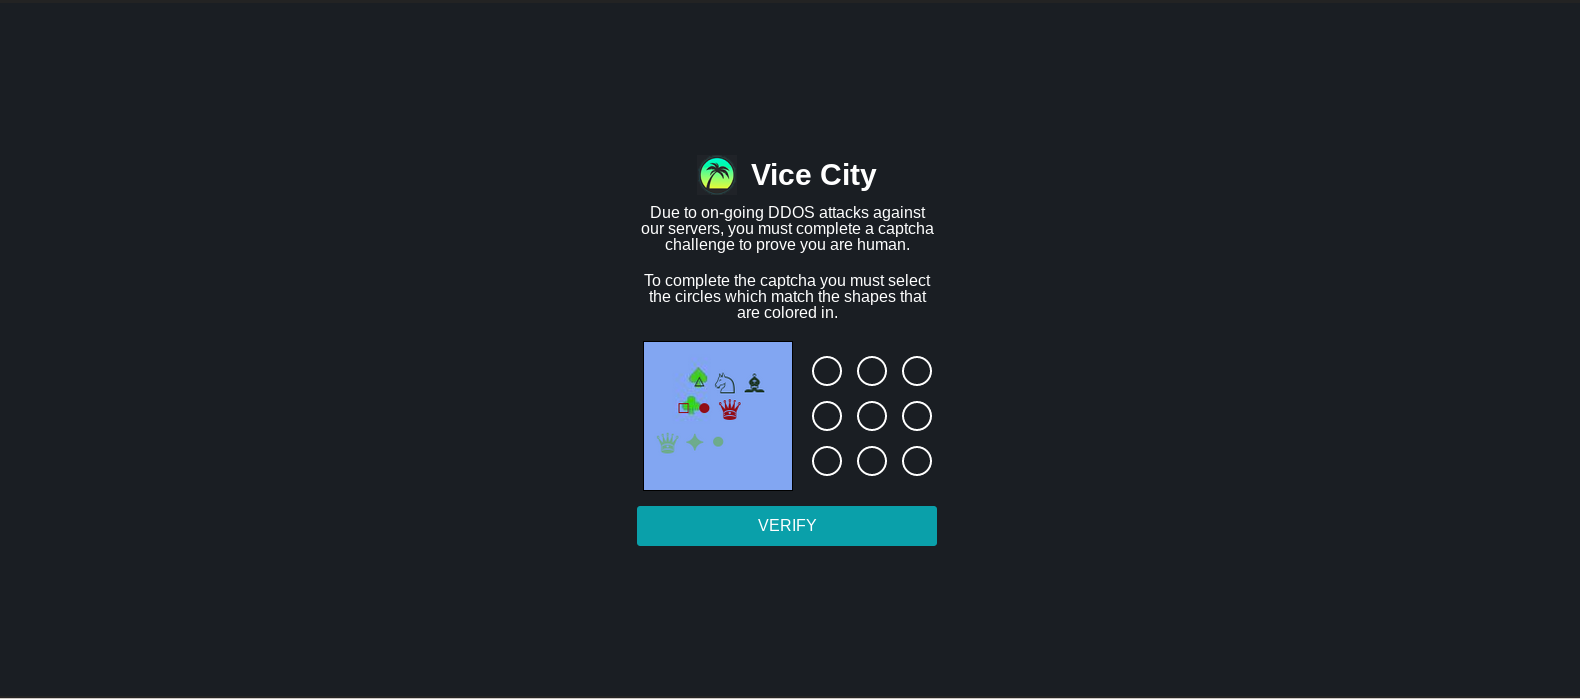 Vice city market darknet